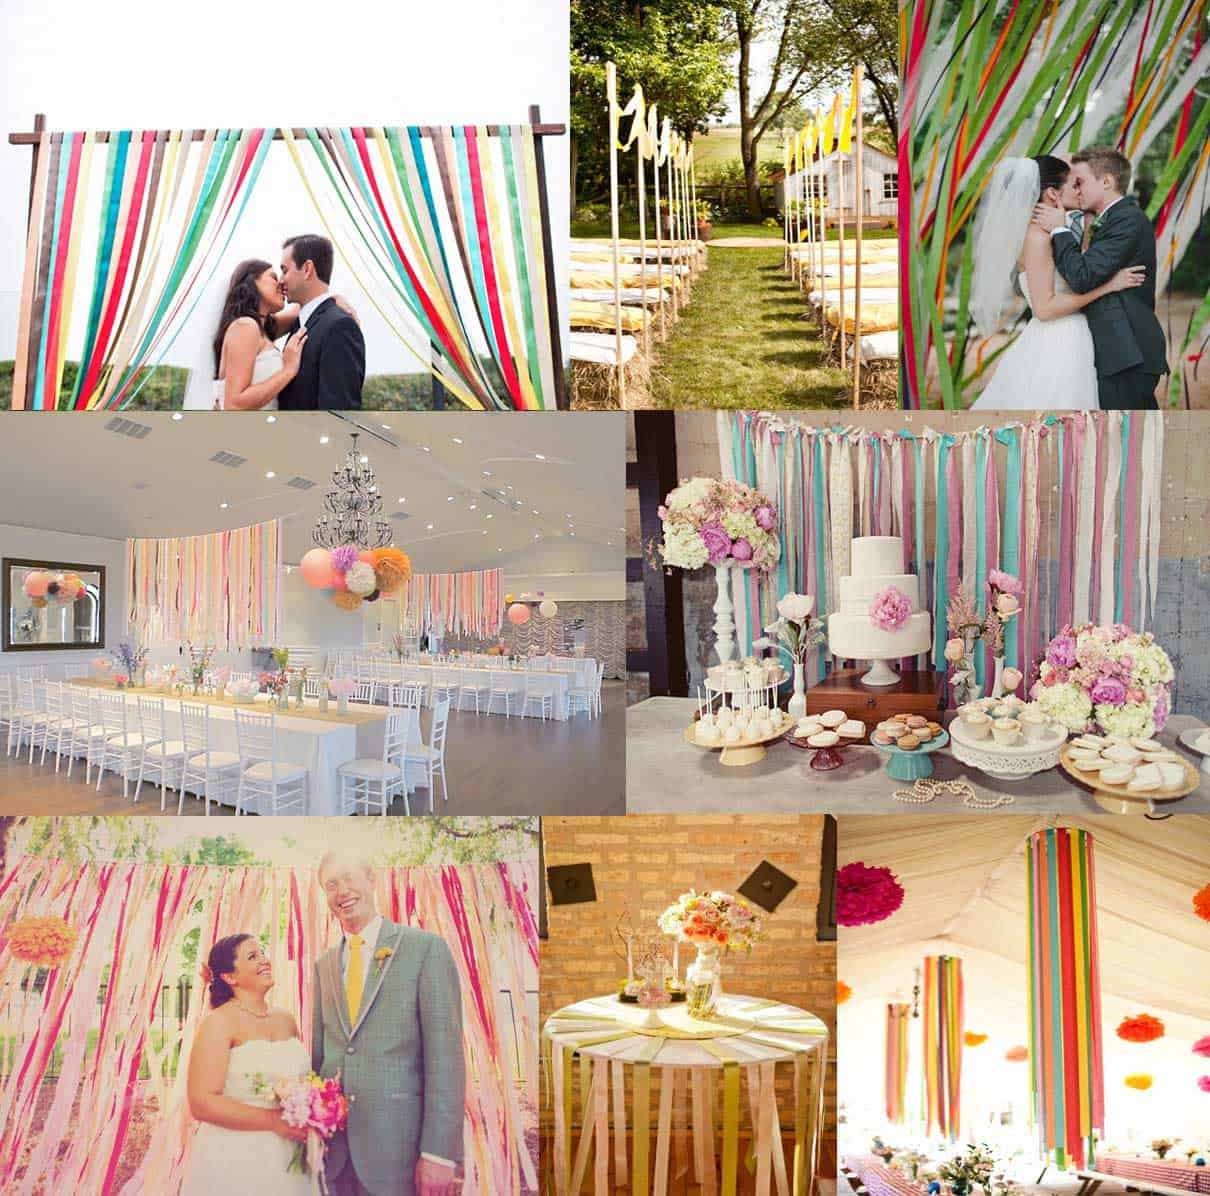 DIY Wedding Decor On A Budget
 DIY Wedding Decorations For Every Bud Inspired Bride